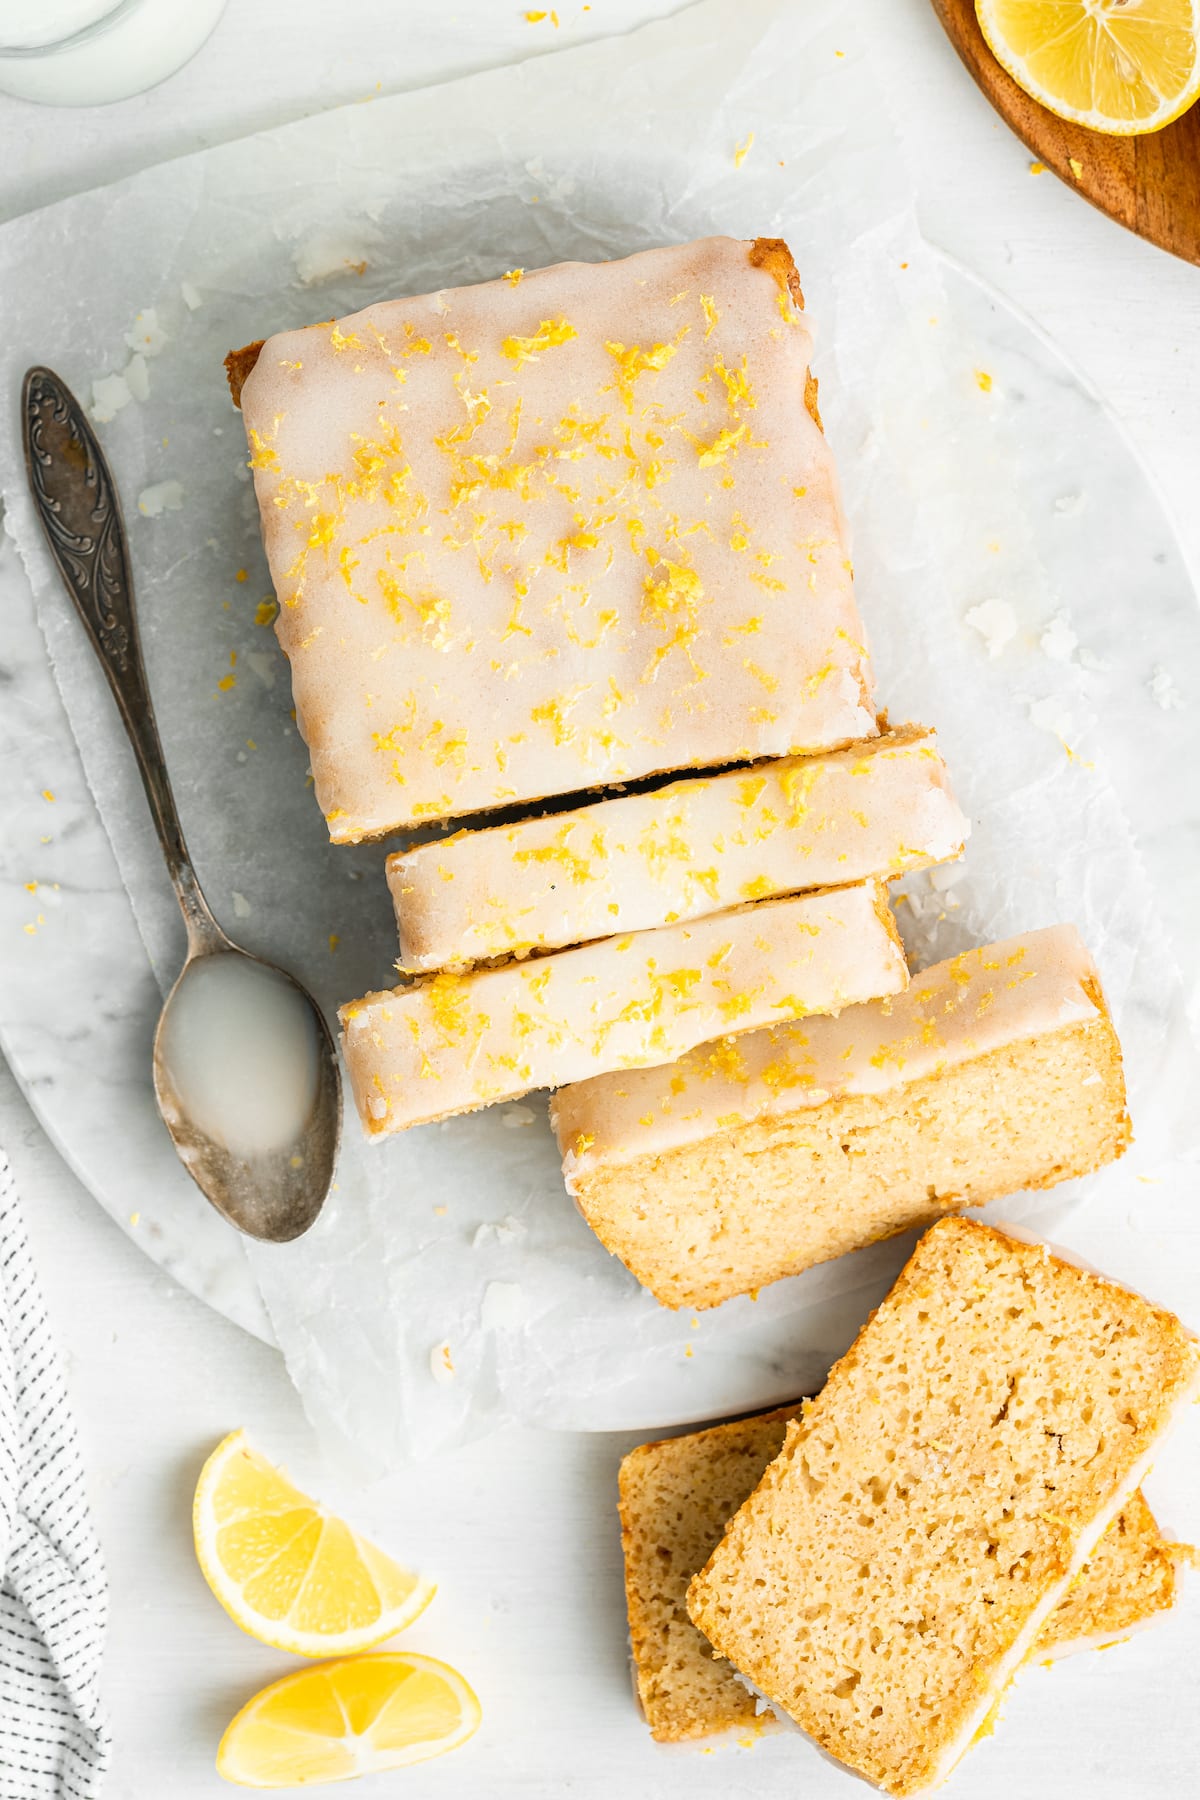 An overhead image of a lemon loaf cut into 5 slices. The lemon loaf is topped with a lemon glaze and lemon zest.